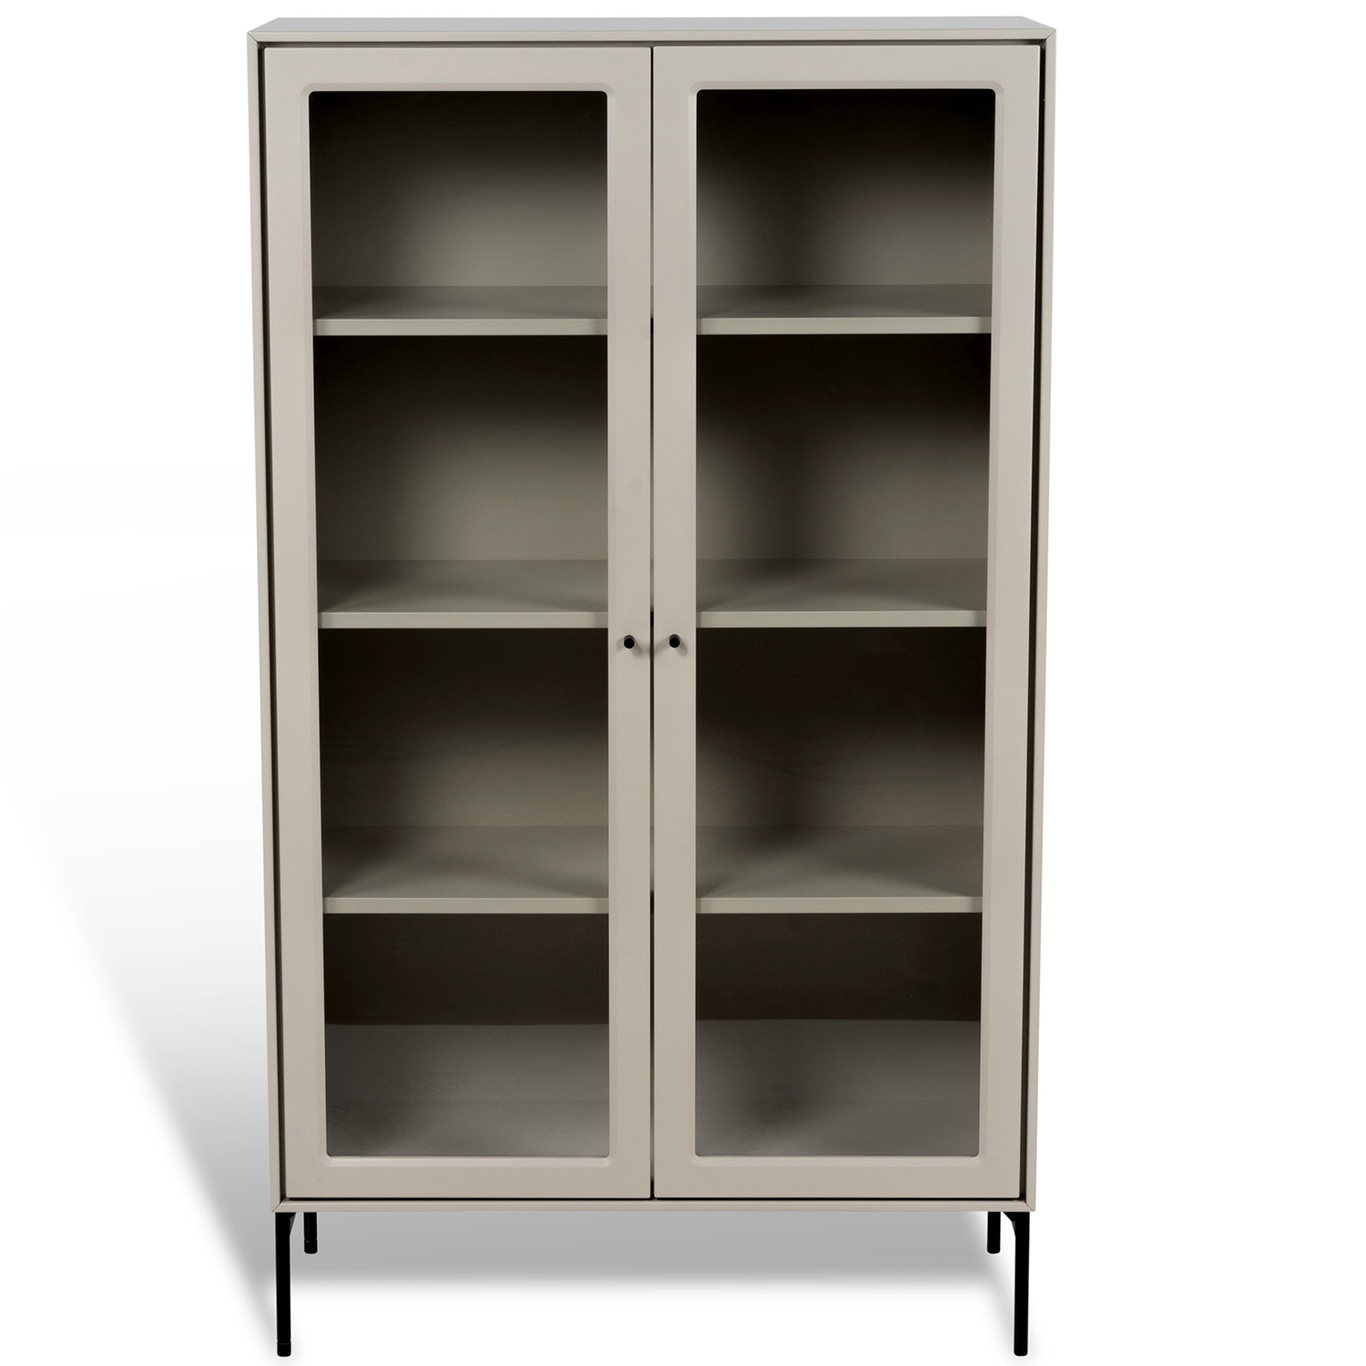 Volt Cabinet With Glass Doors 130 cm, Beige/Black